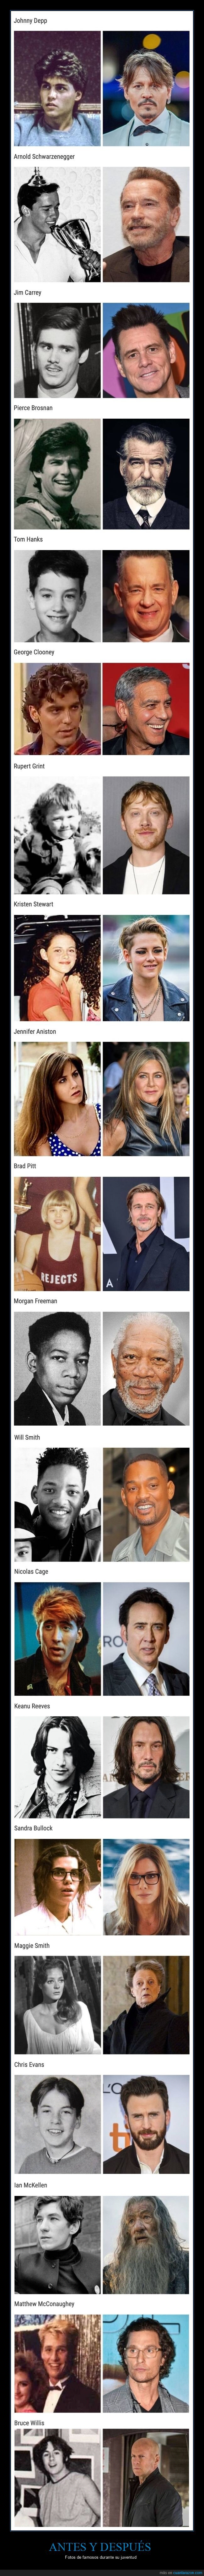 antes,después,actores,famosos